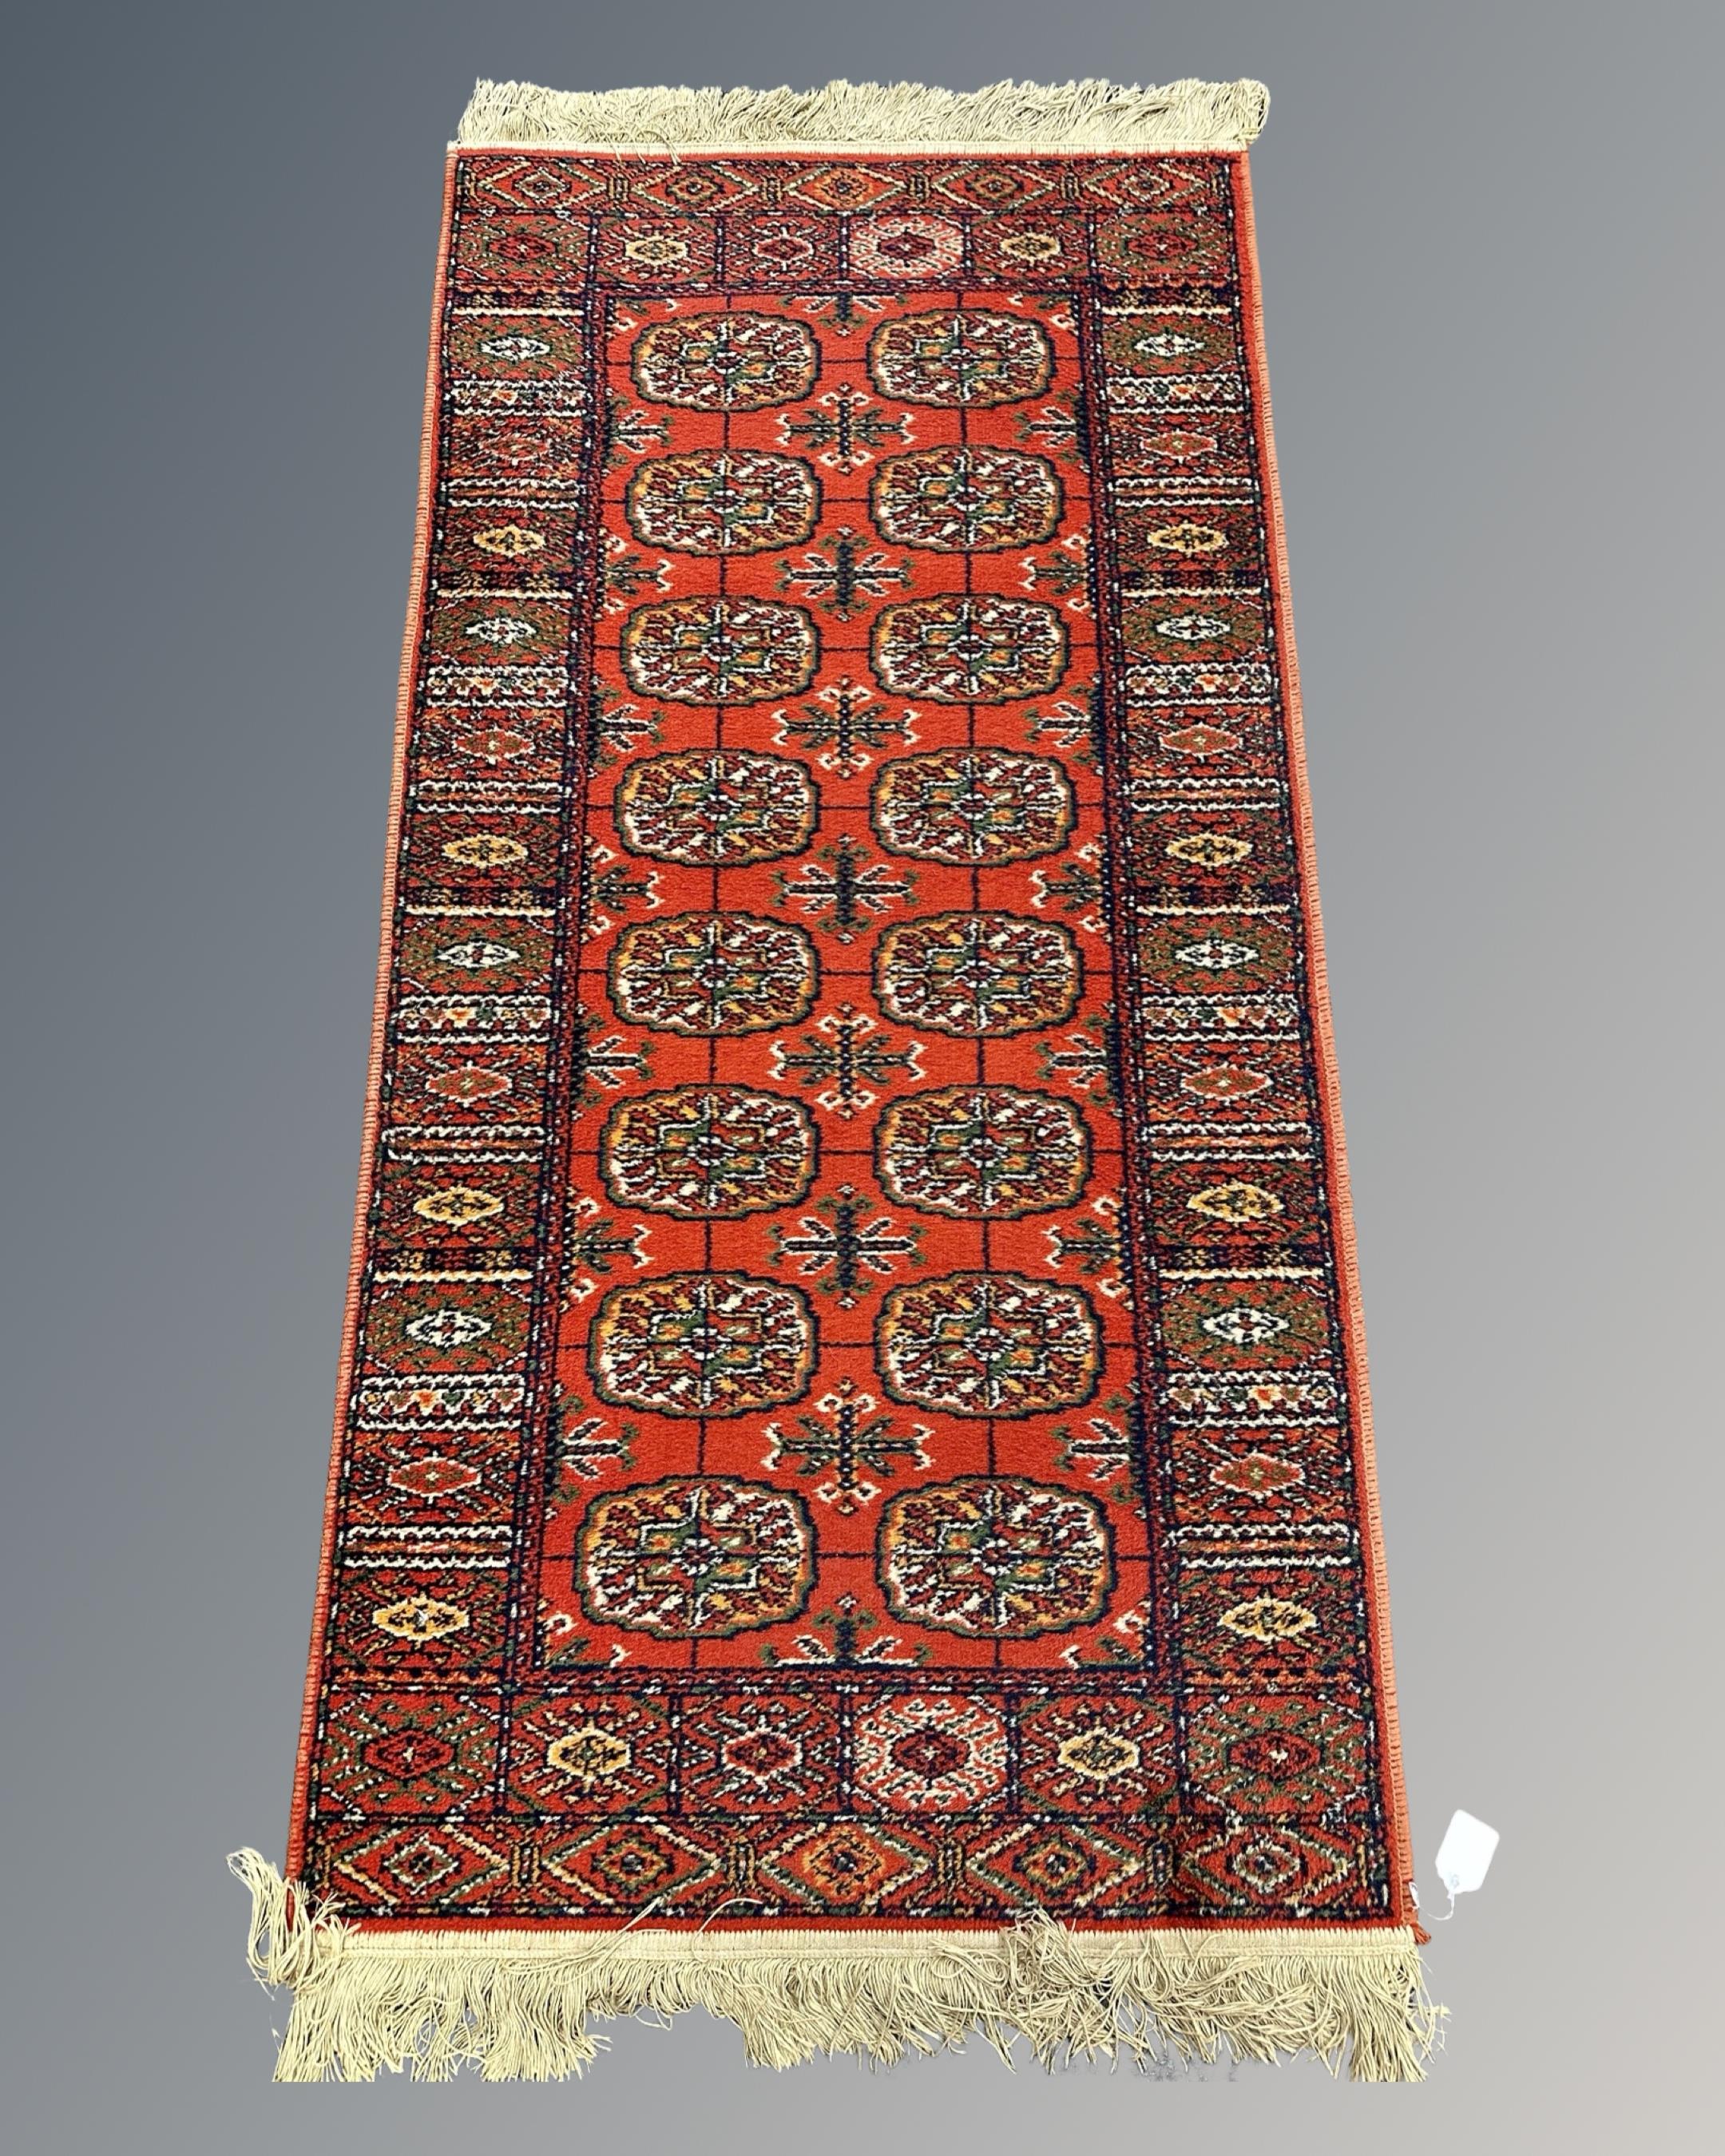 A machined Bokhara design rug, 69cm by 138cm.